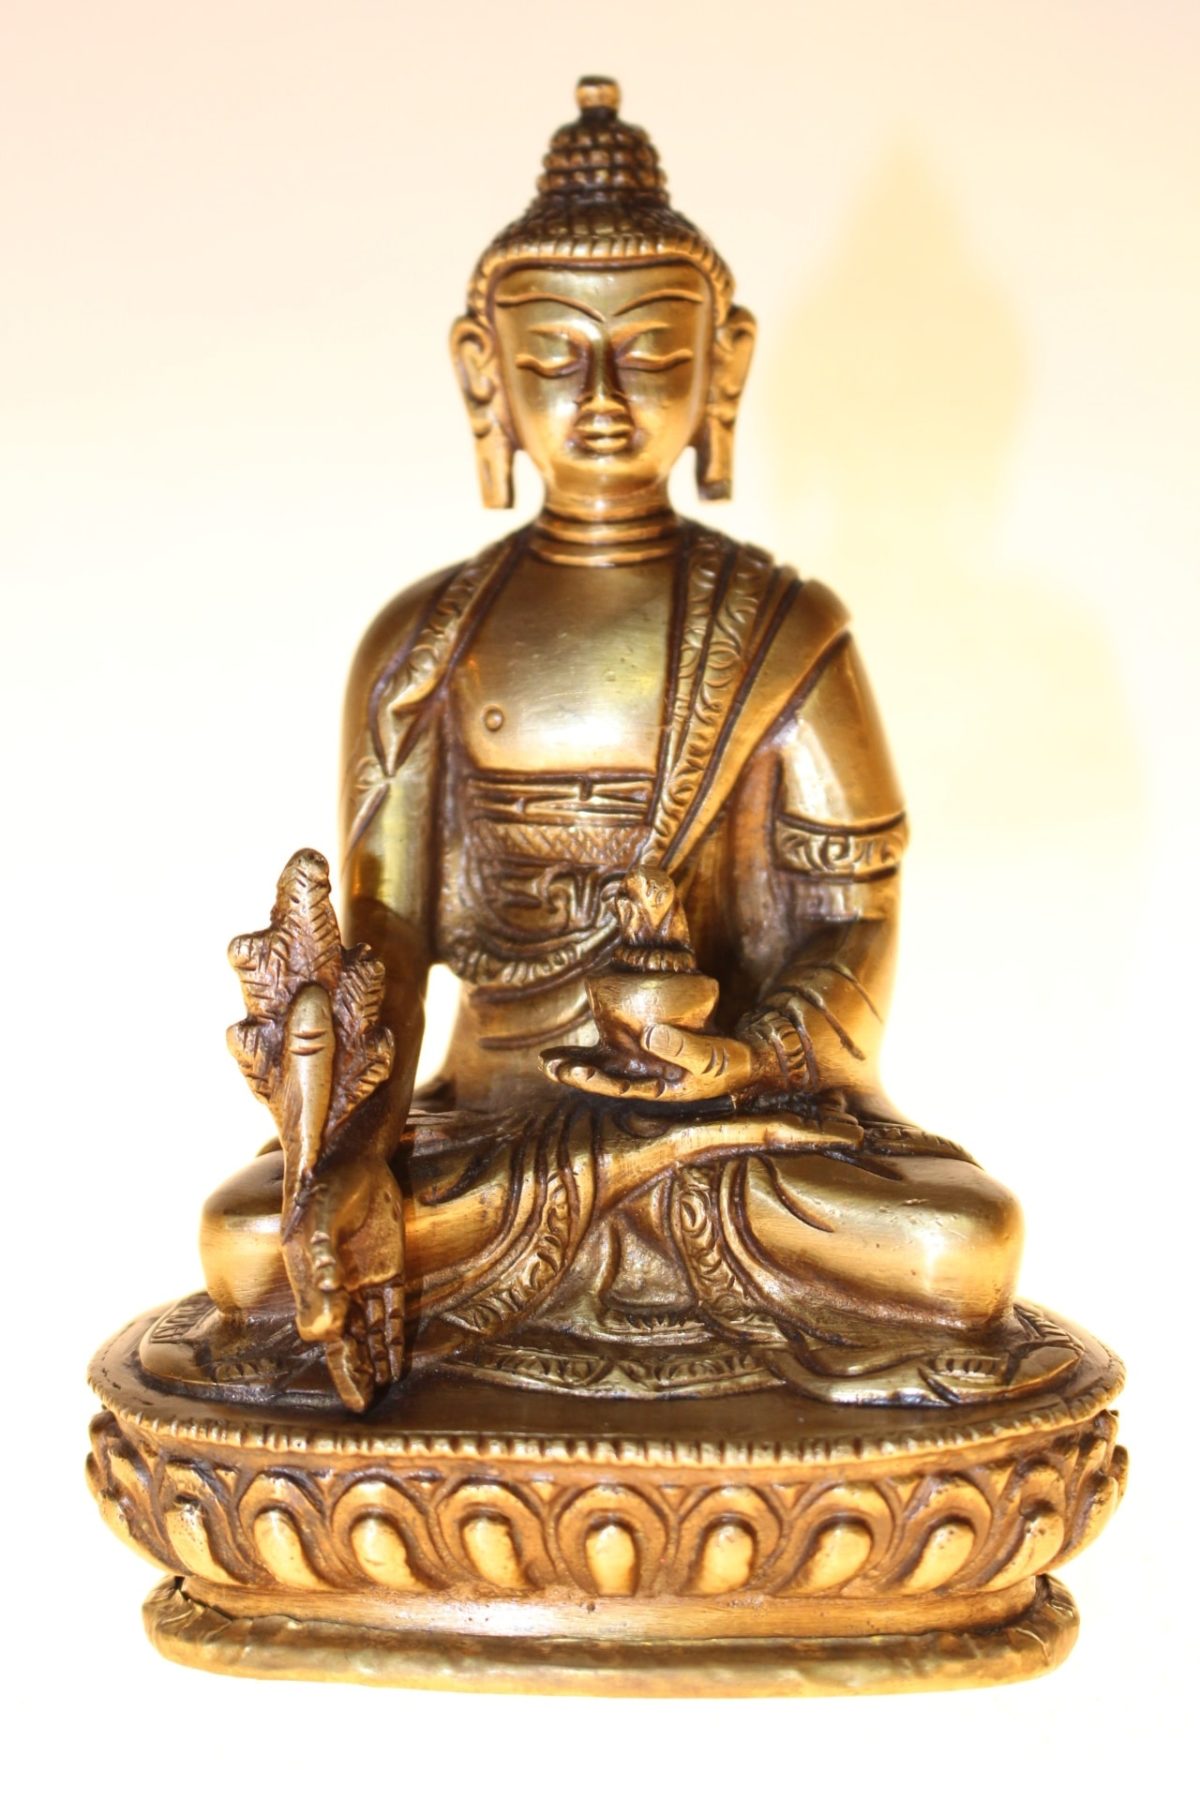 Medizin Buddha Bronze, Buddhafigur - Onlineshop asian-garden.de